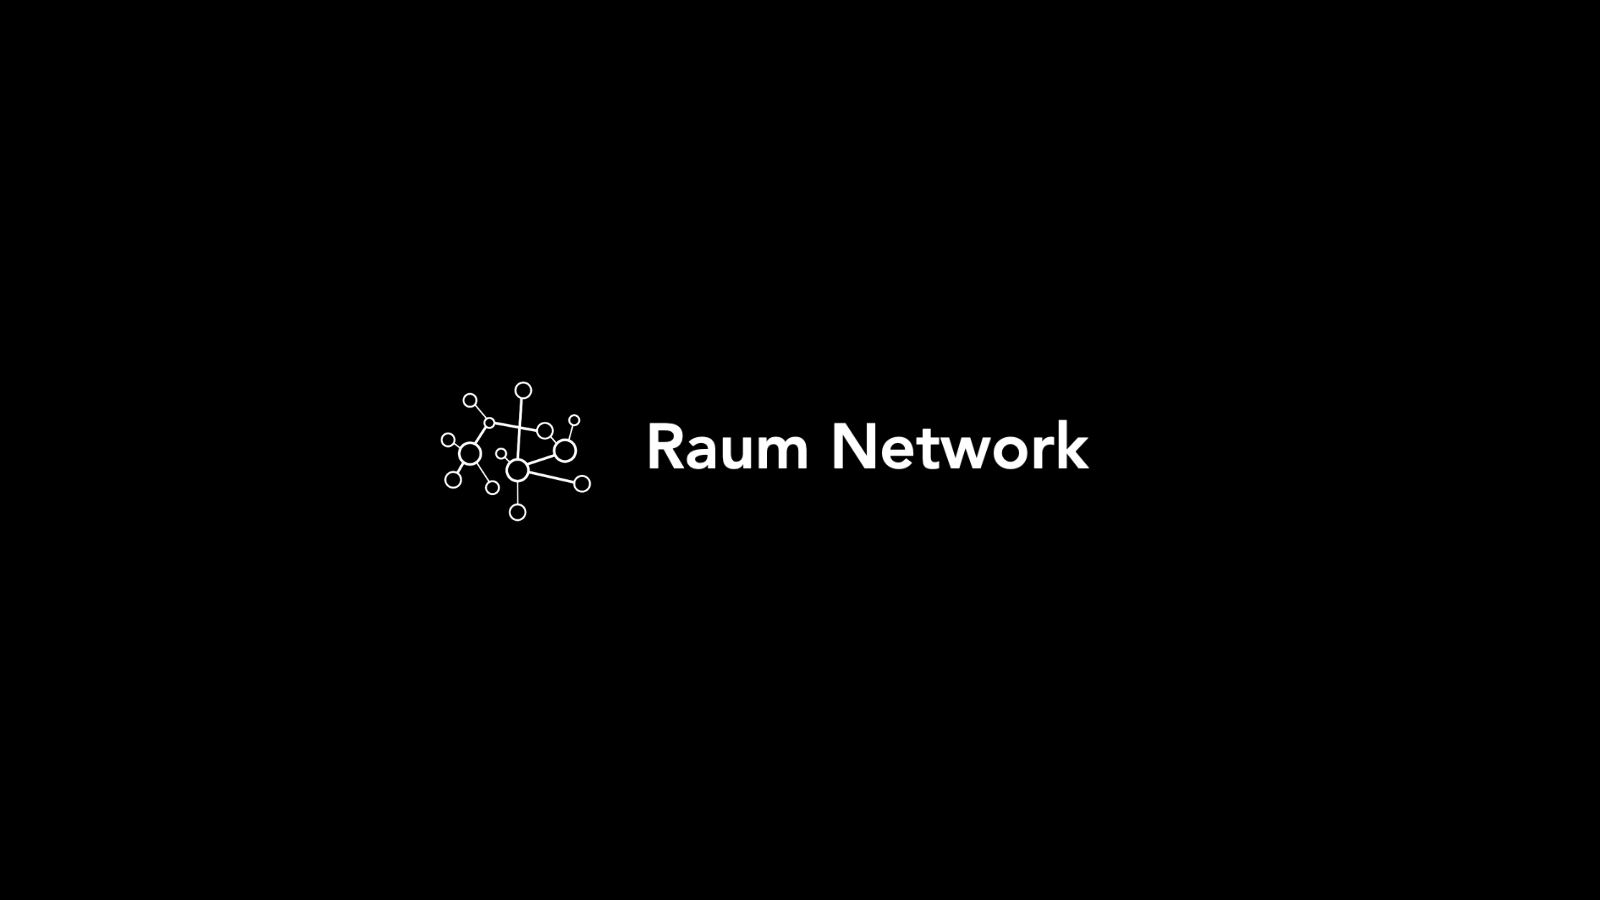 Raum Network